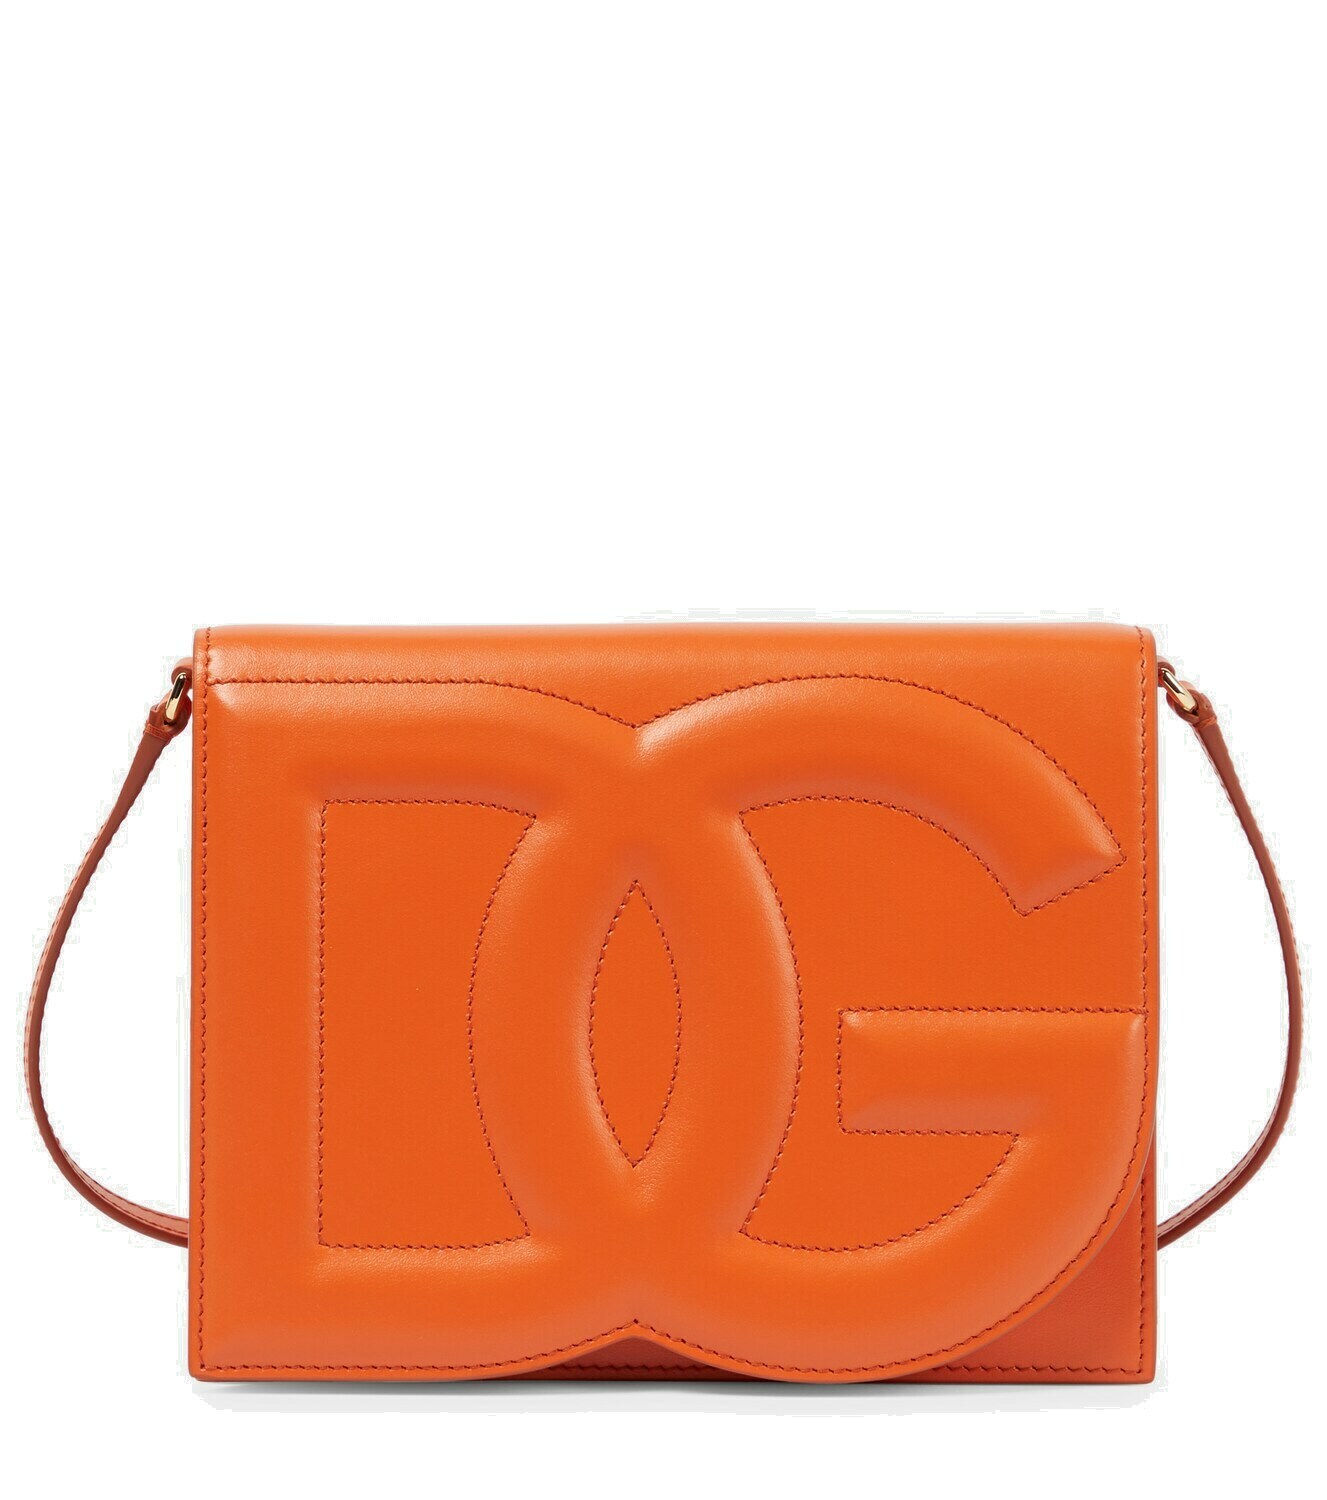 Dolce&Gabbana - DG leather shoulder bag Dolce & Gabbana